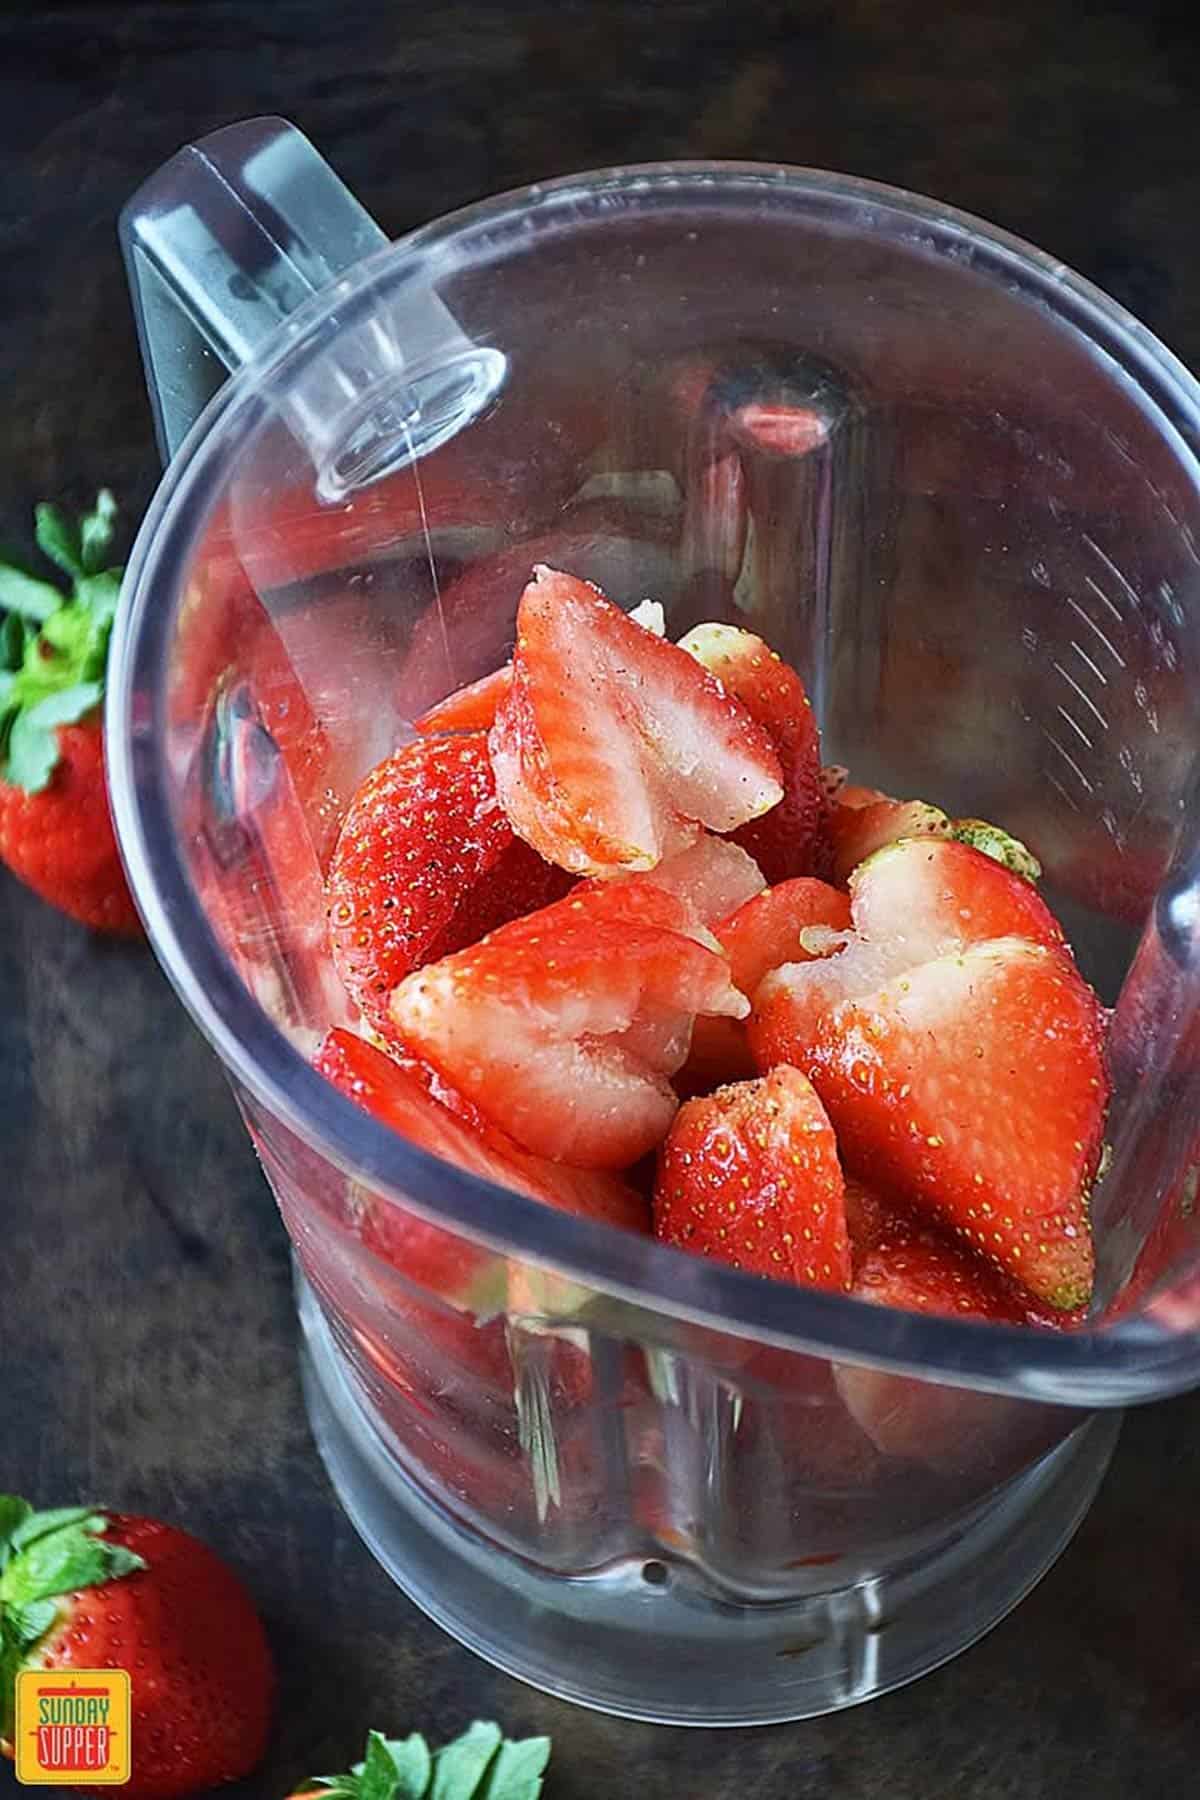 Frozen sliced strawberries in a blender